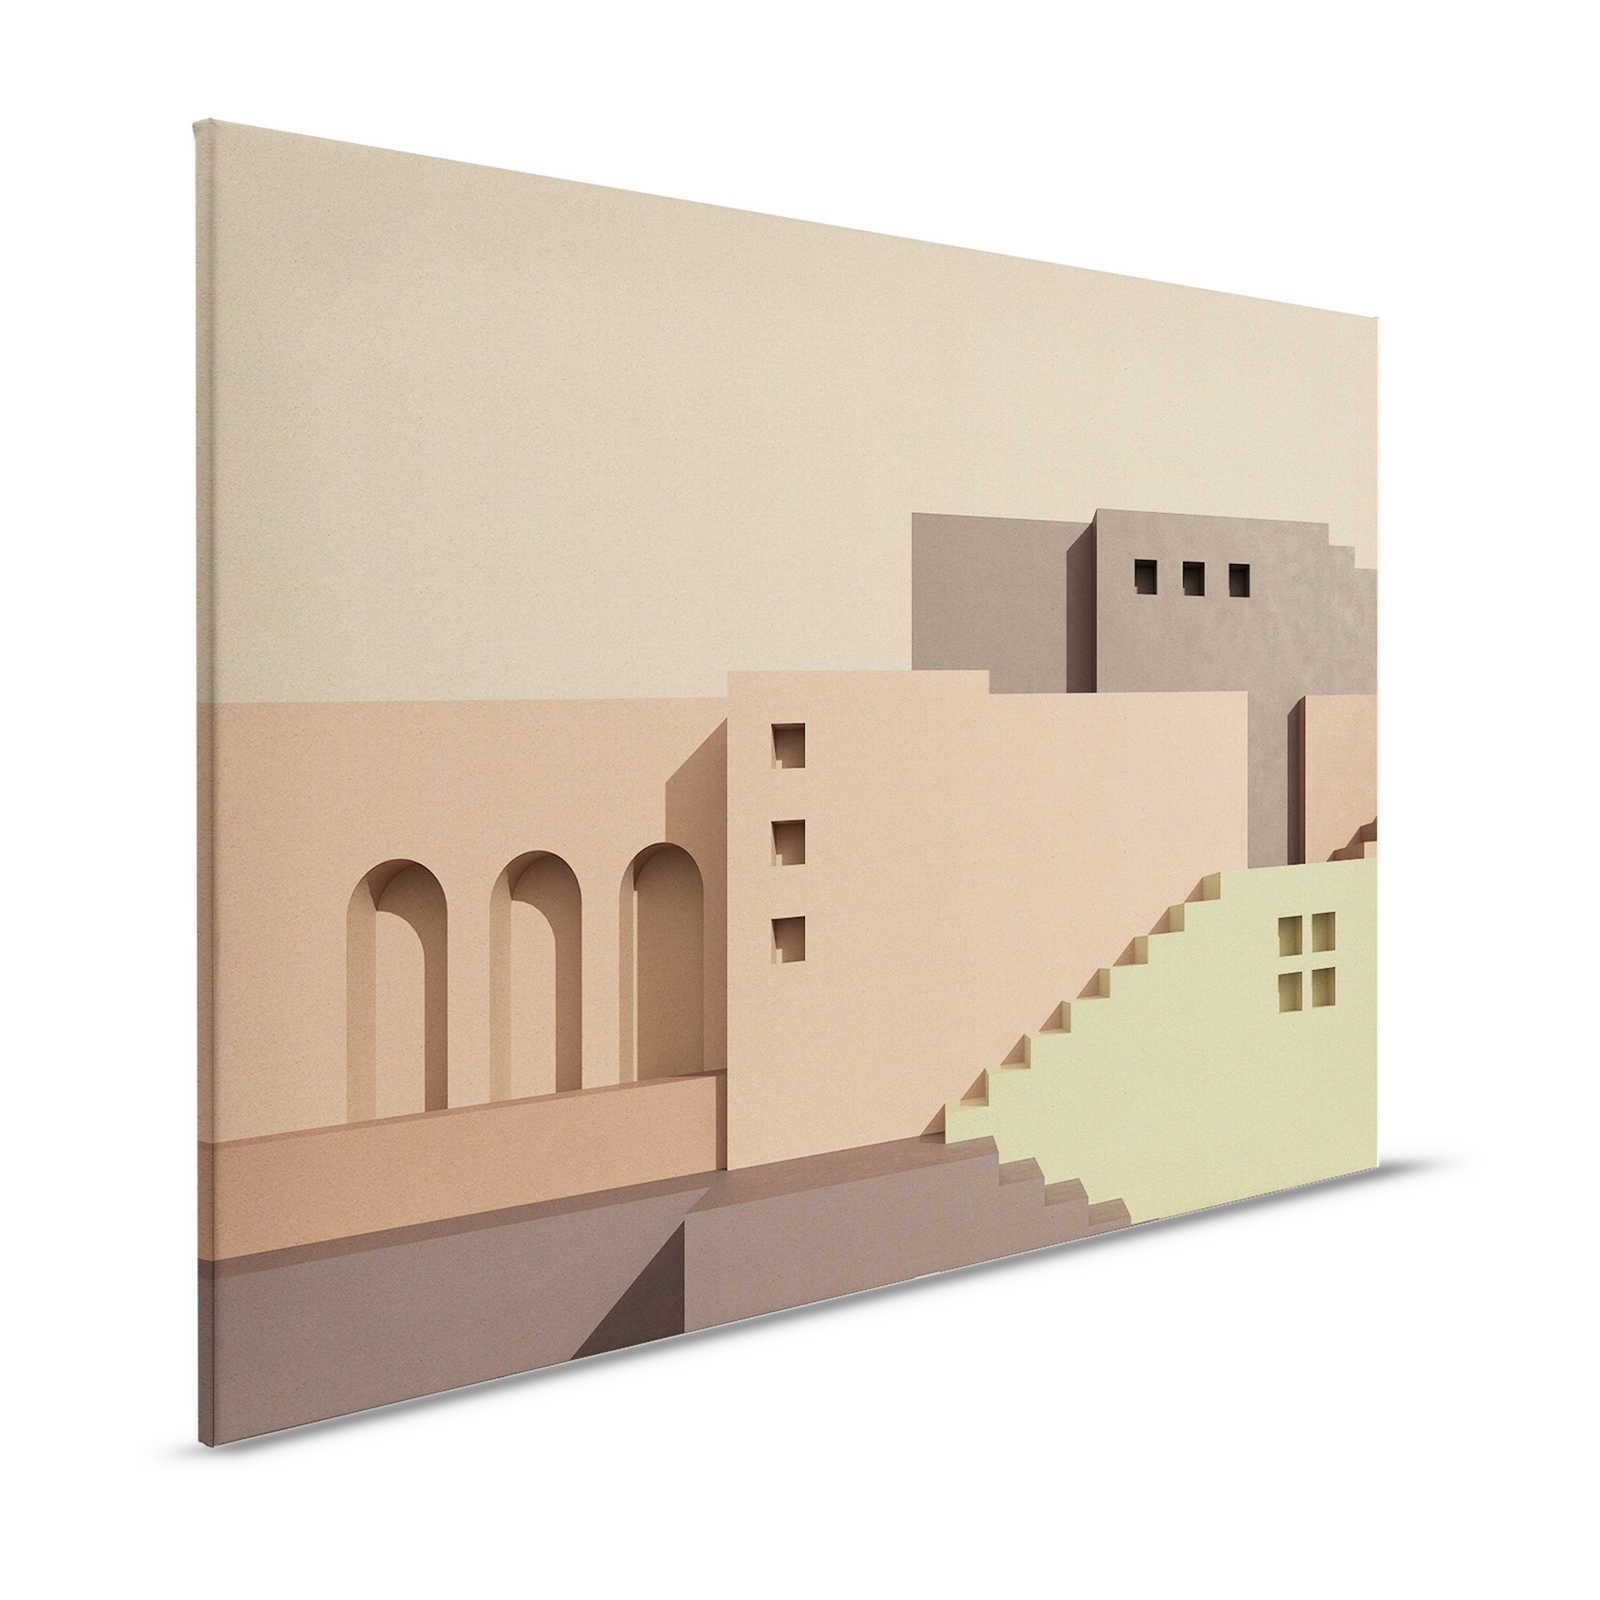 Tanger 2 - Leinwandbild Architektur Dessert Design abstrakt – 1,20 m x 0,80 m
